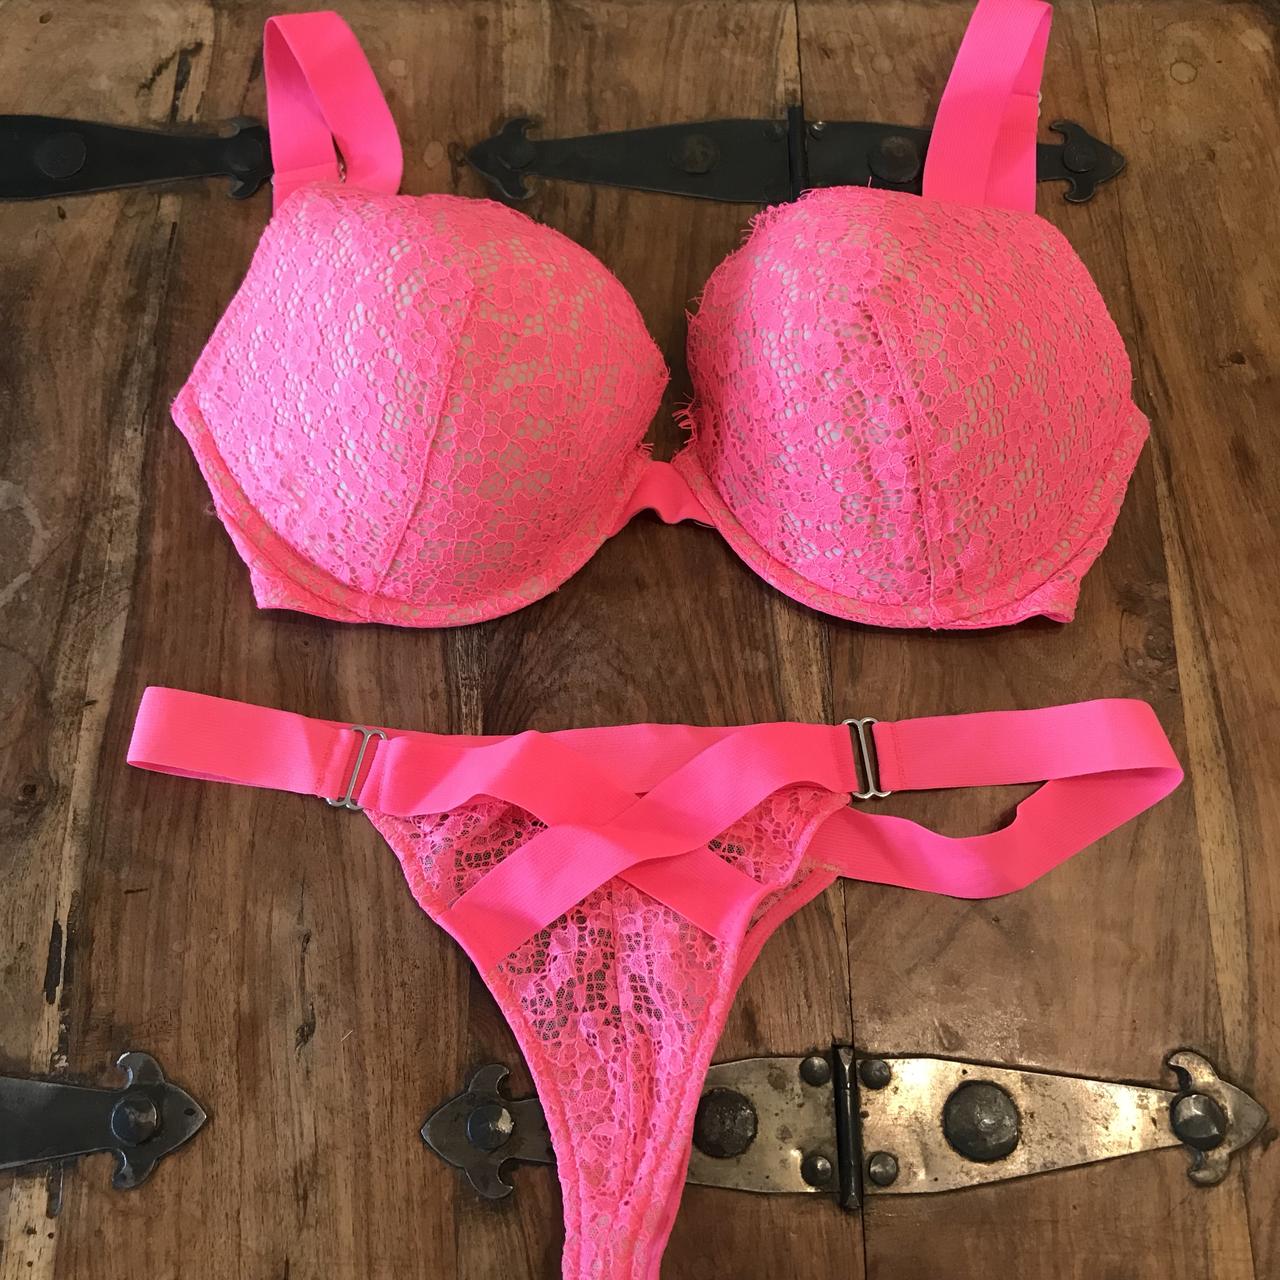 Victoria’s secrets pink bra and knickers panties set